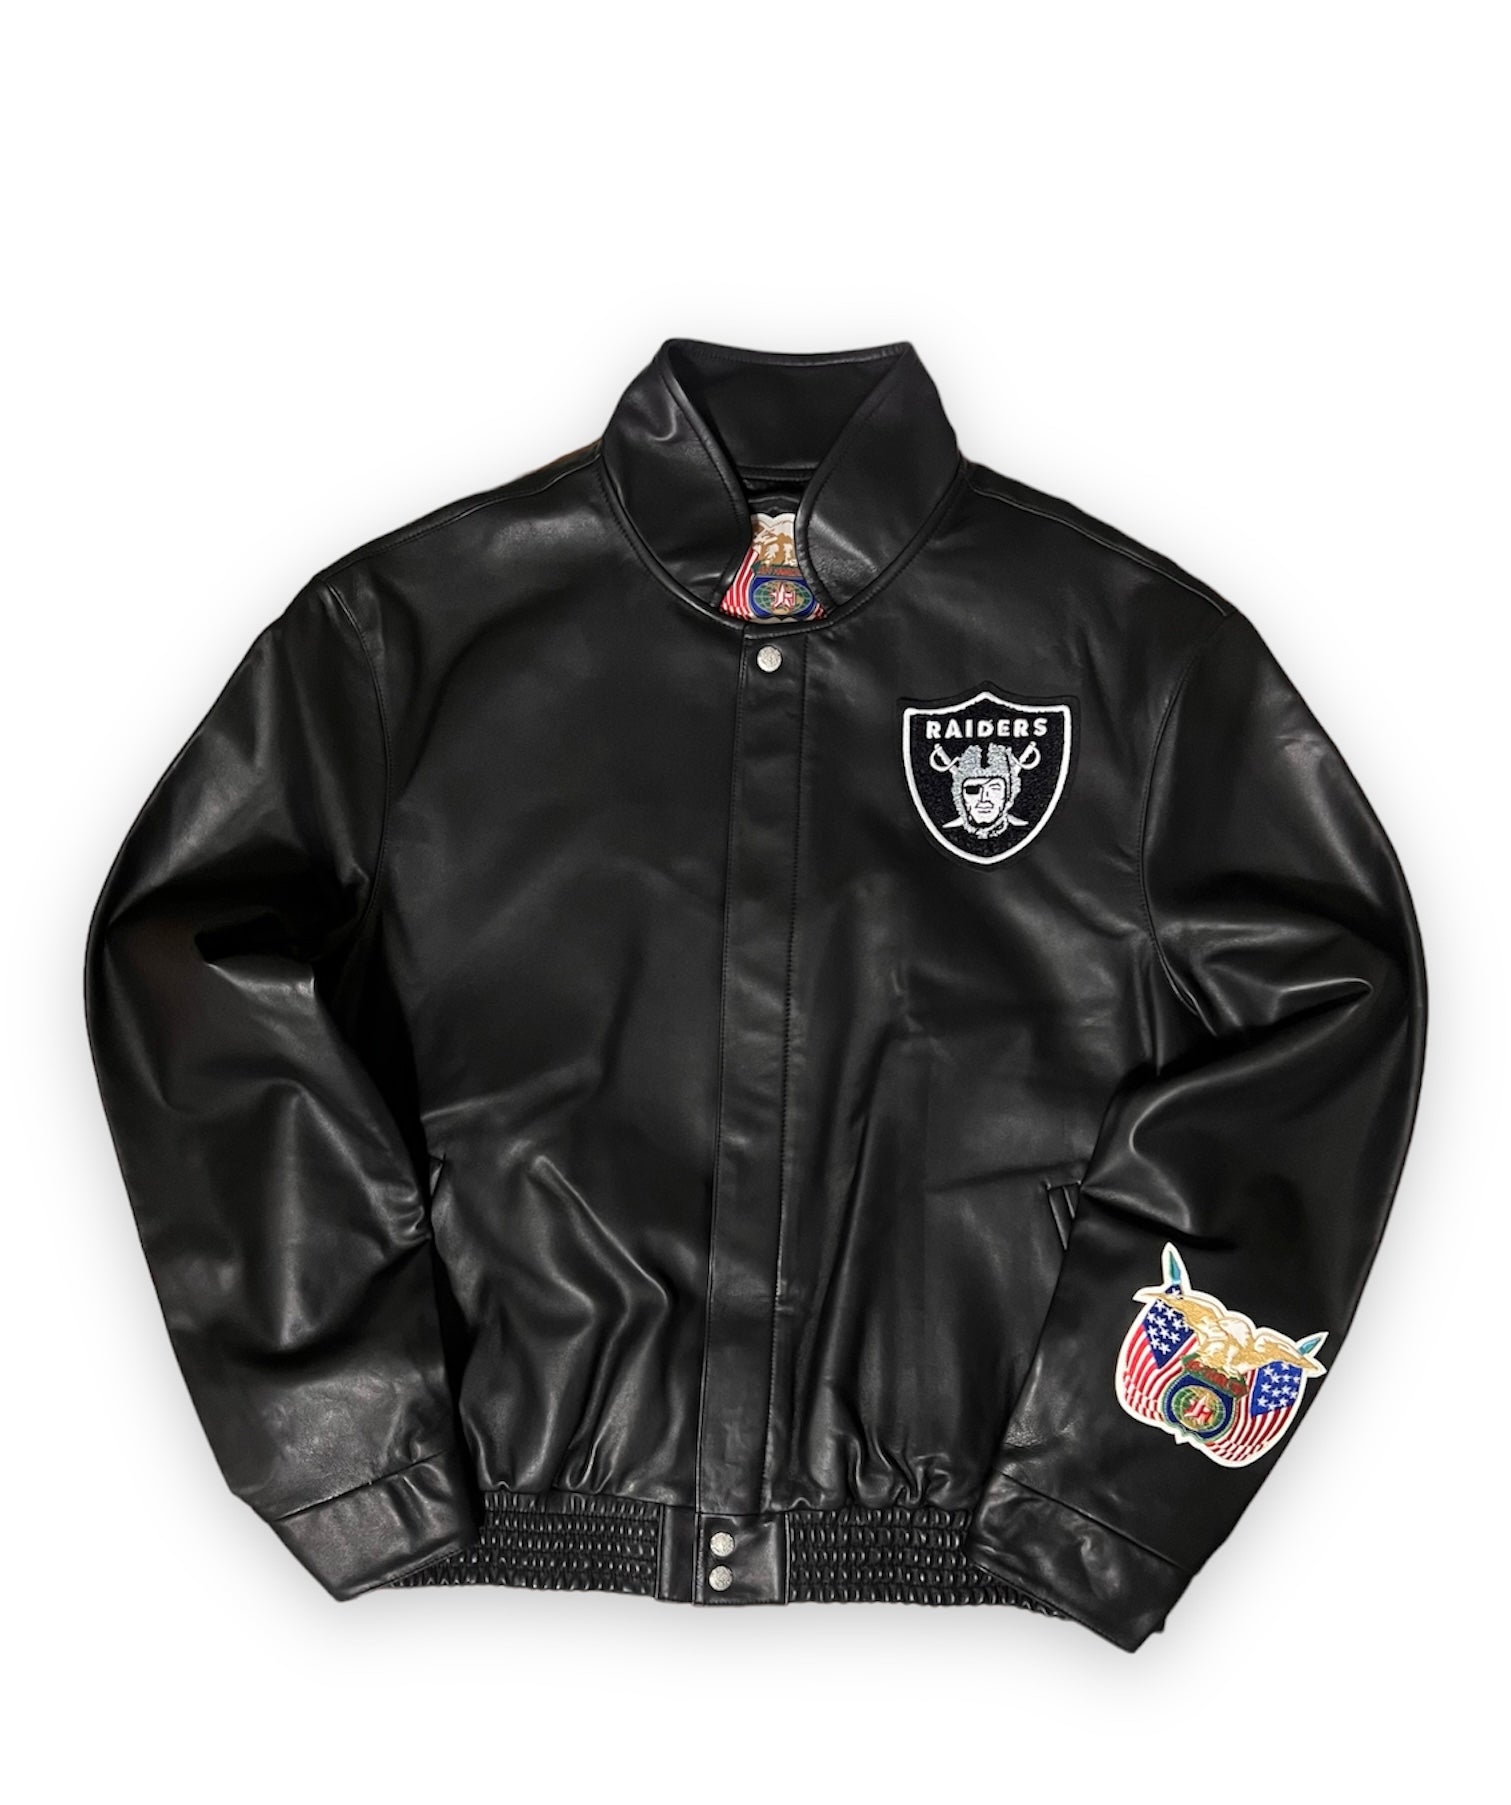 Las Vegas Raiders Letterman Jacket - Black/White